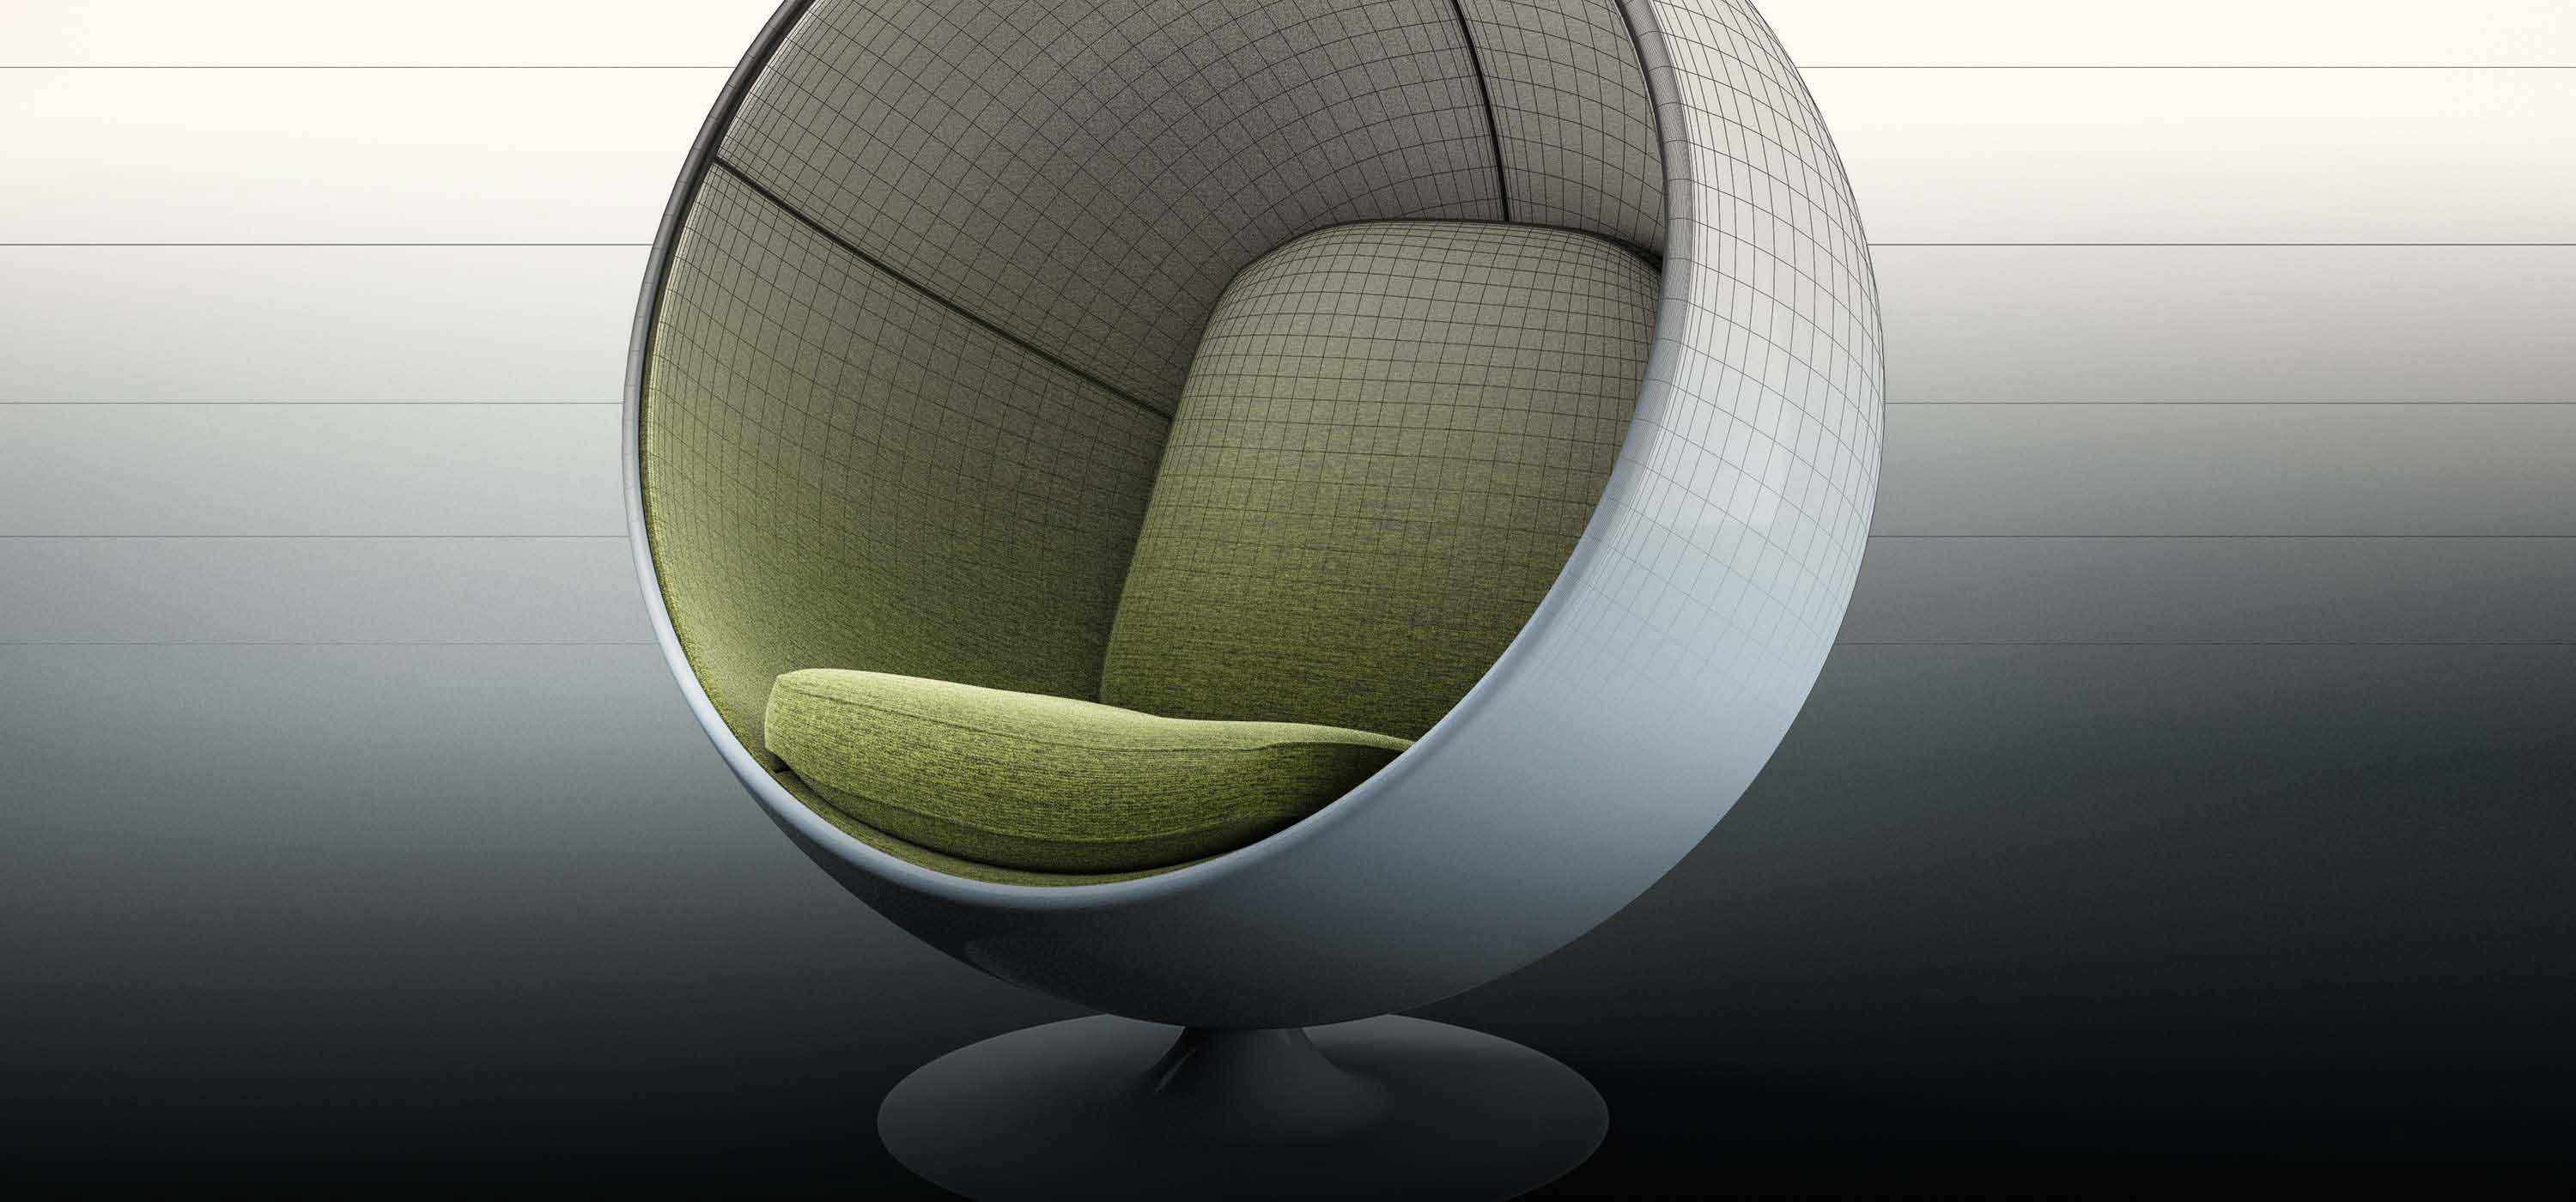 Eero Aarnio Ball Chair 3D Model | C4D FBX OBJ CGI Asset PRO EDU is the #1 platform for photography education.